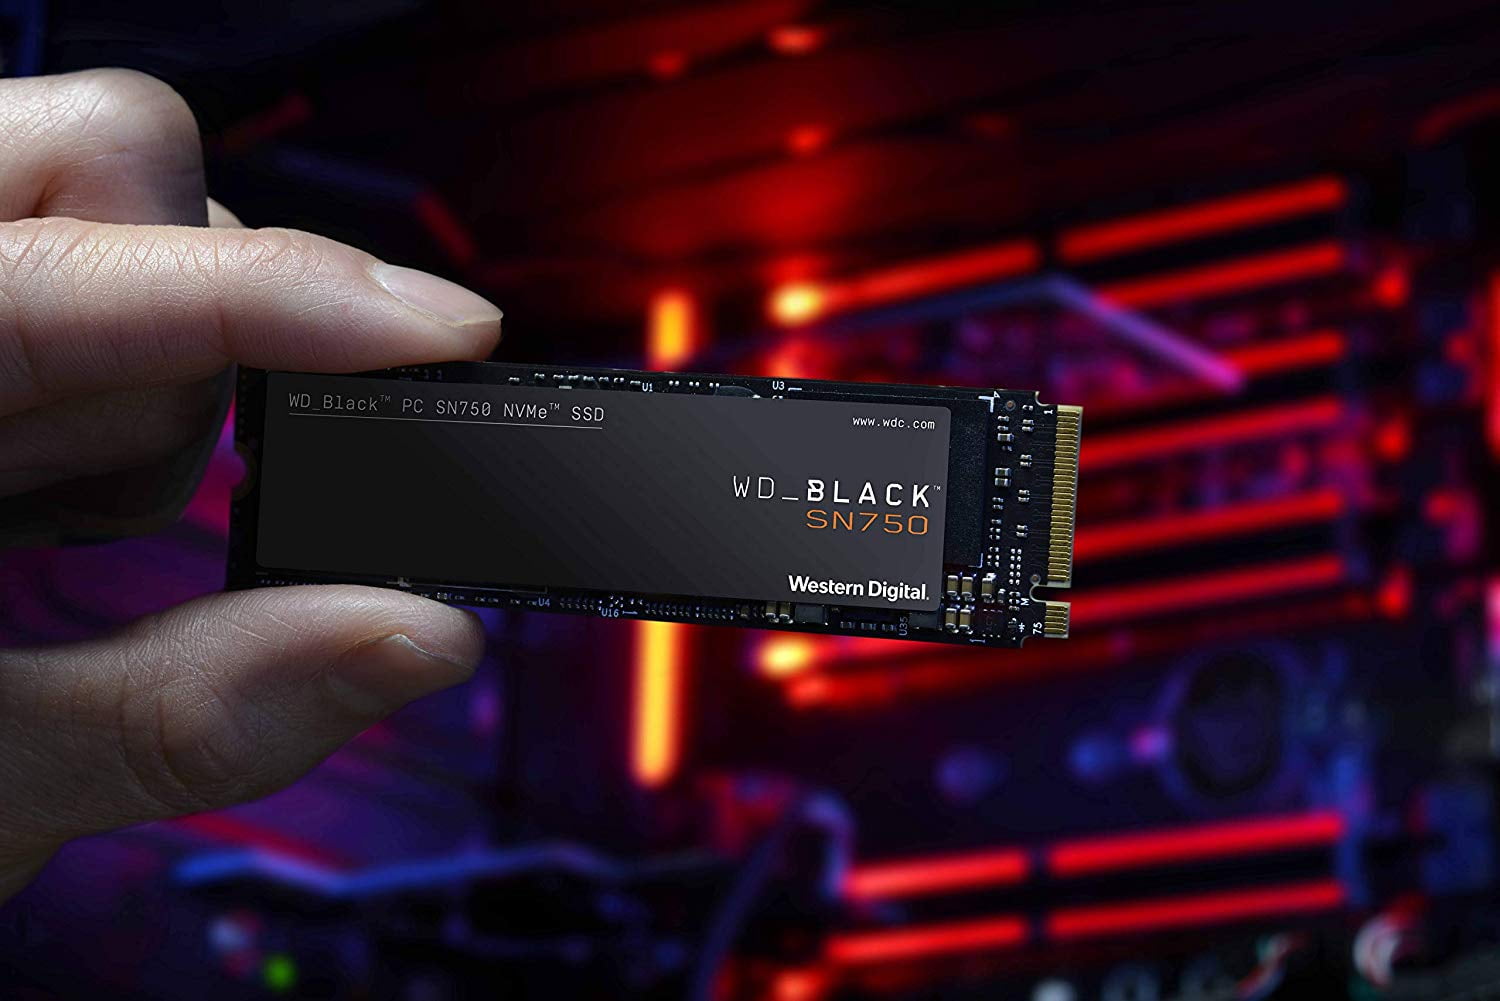 WD BLACK SN750 1TB NVMe Internal Gaming SSD 3D NAND Gen3 PCIe M.2 2280 WDS100T3X0C 